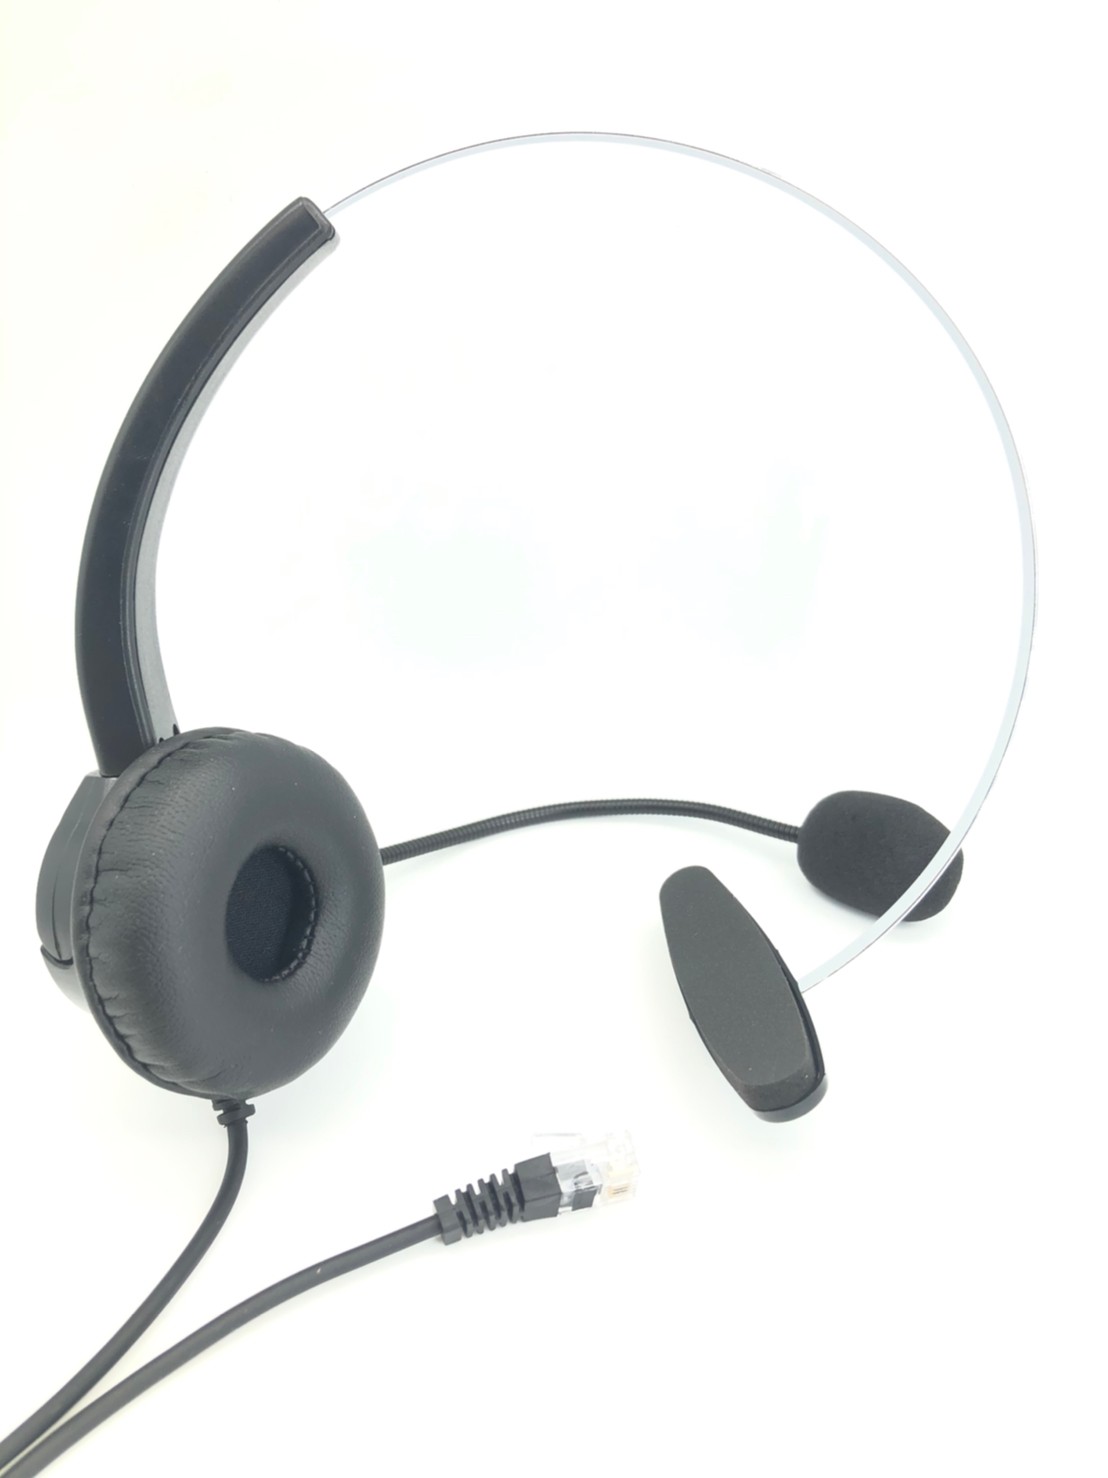 TECOM東訊DX9906E電話耳機麥克風 另有其他廠牌型號歡迎詢問 台北公司貨當日發出